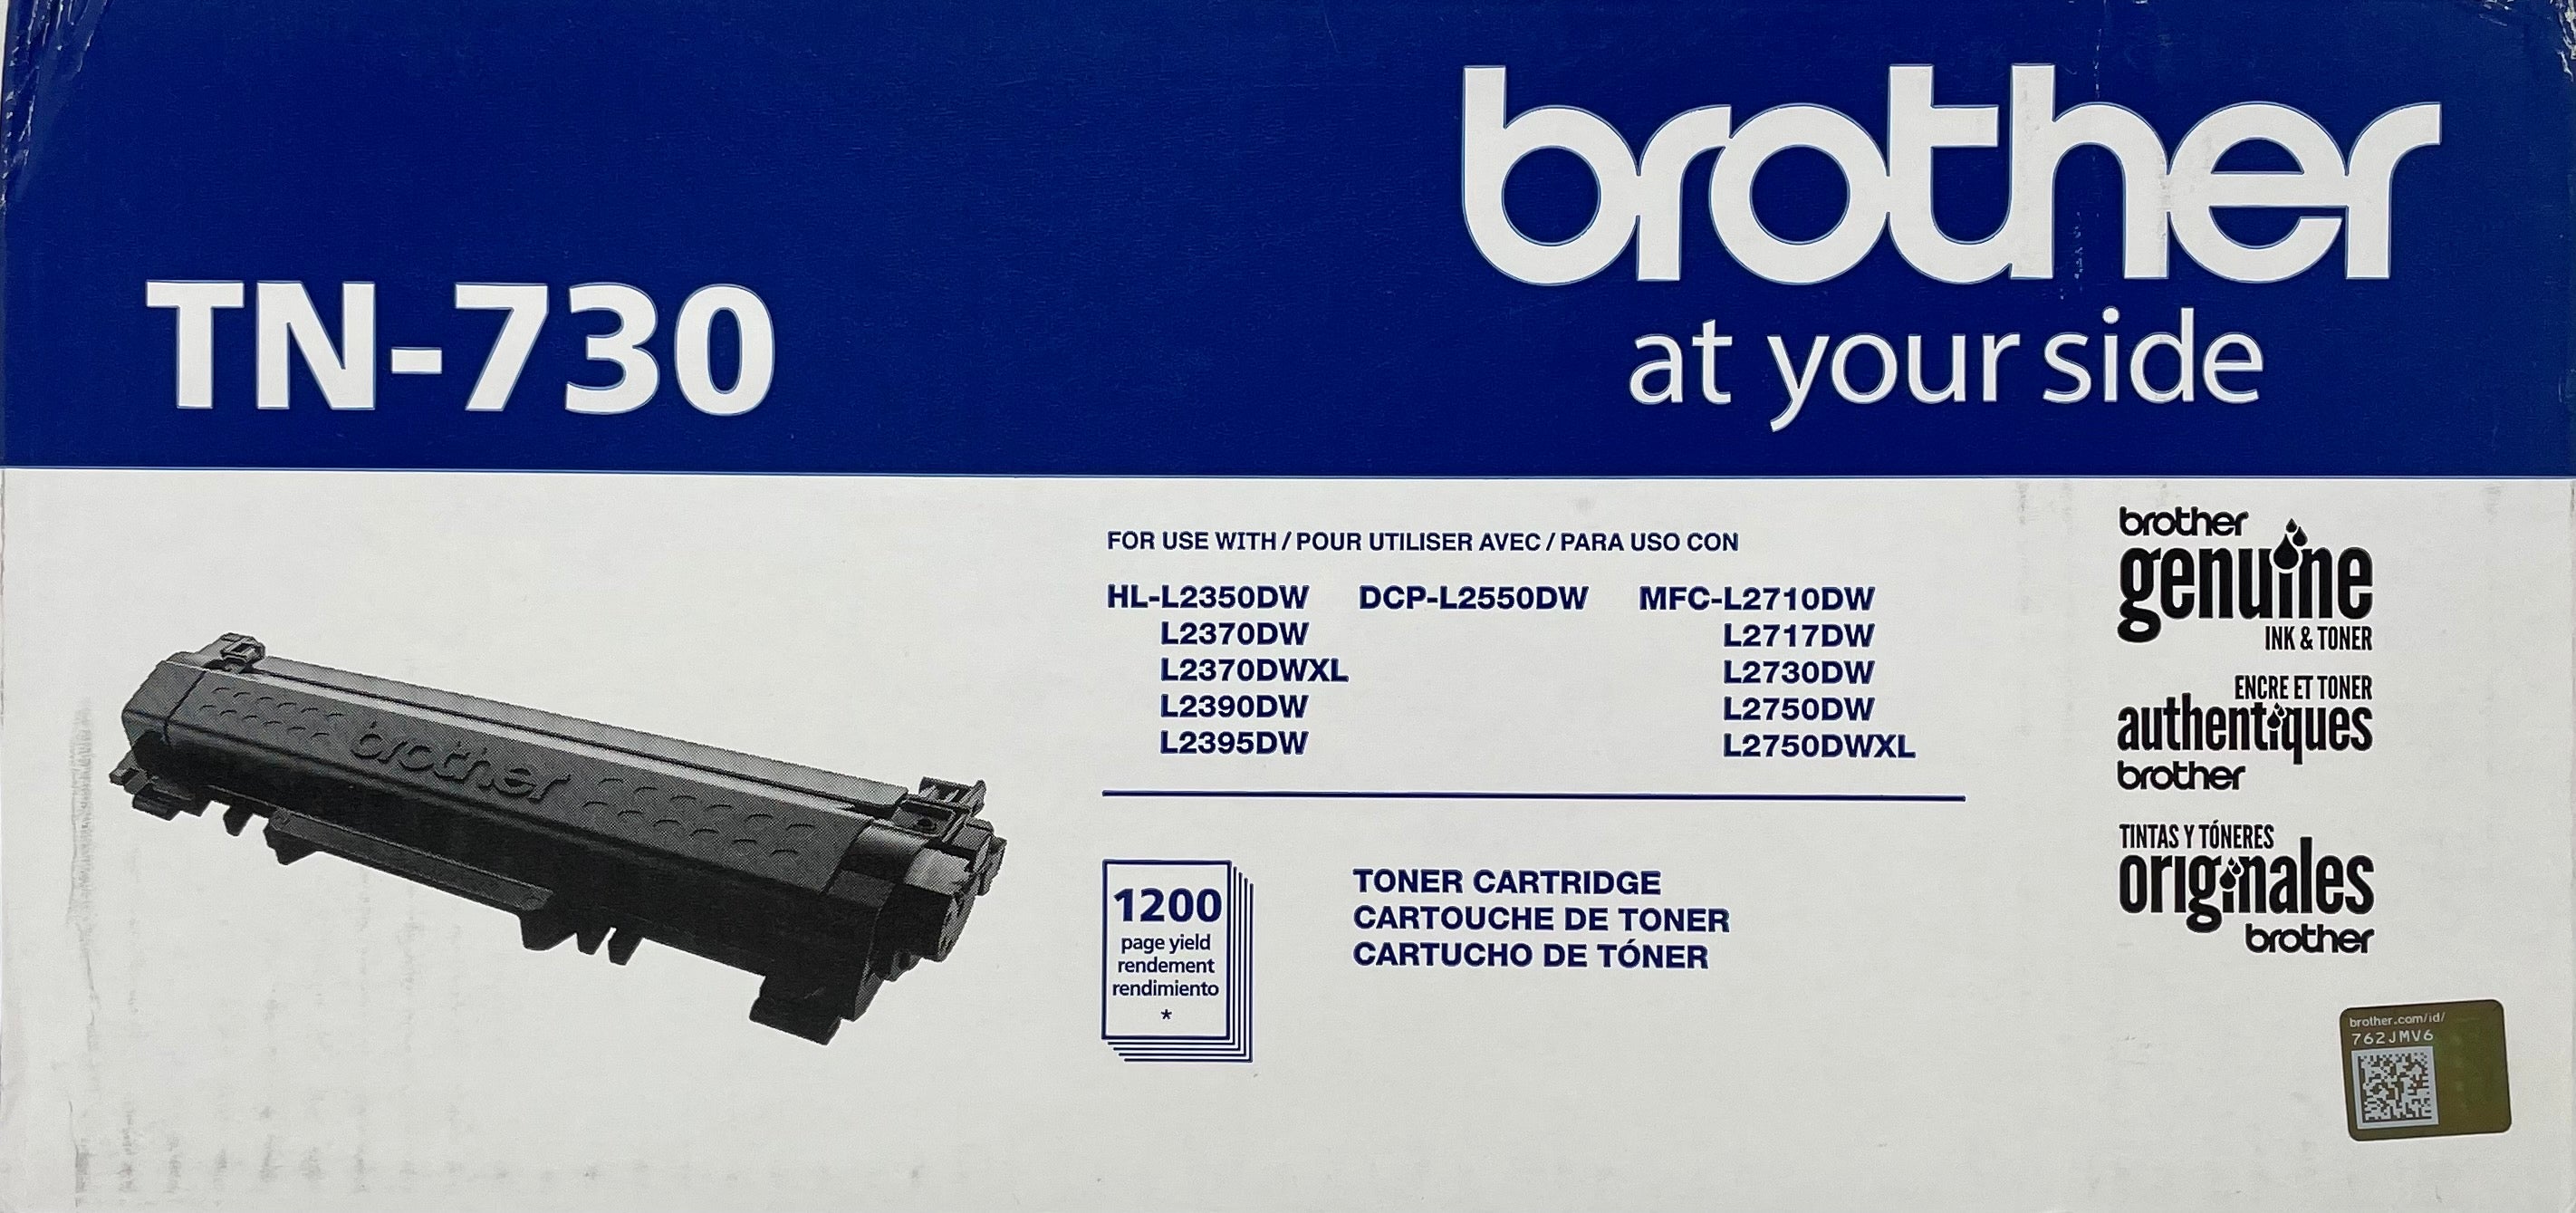 Discount Brother MFC-L2750DW Toner Cartridges